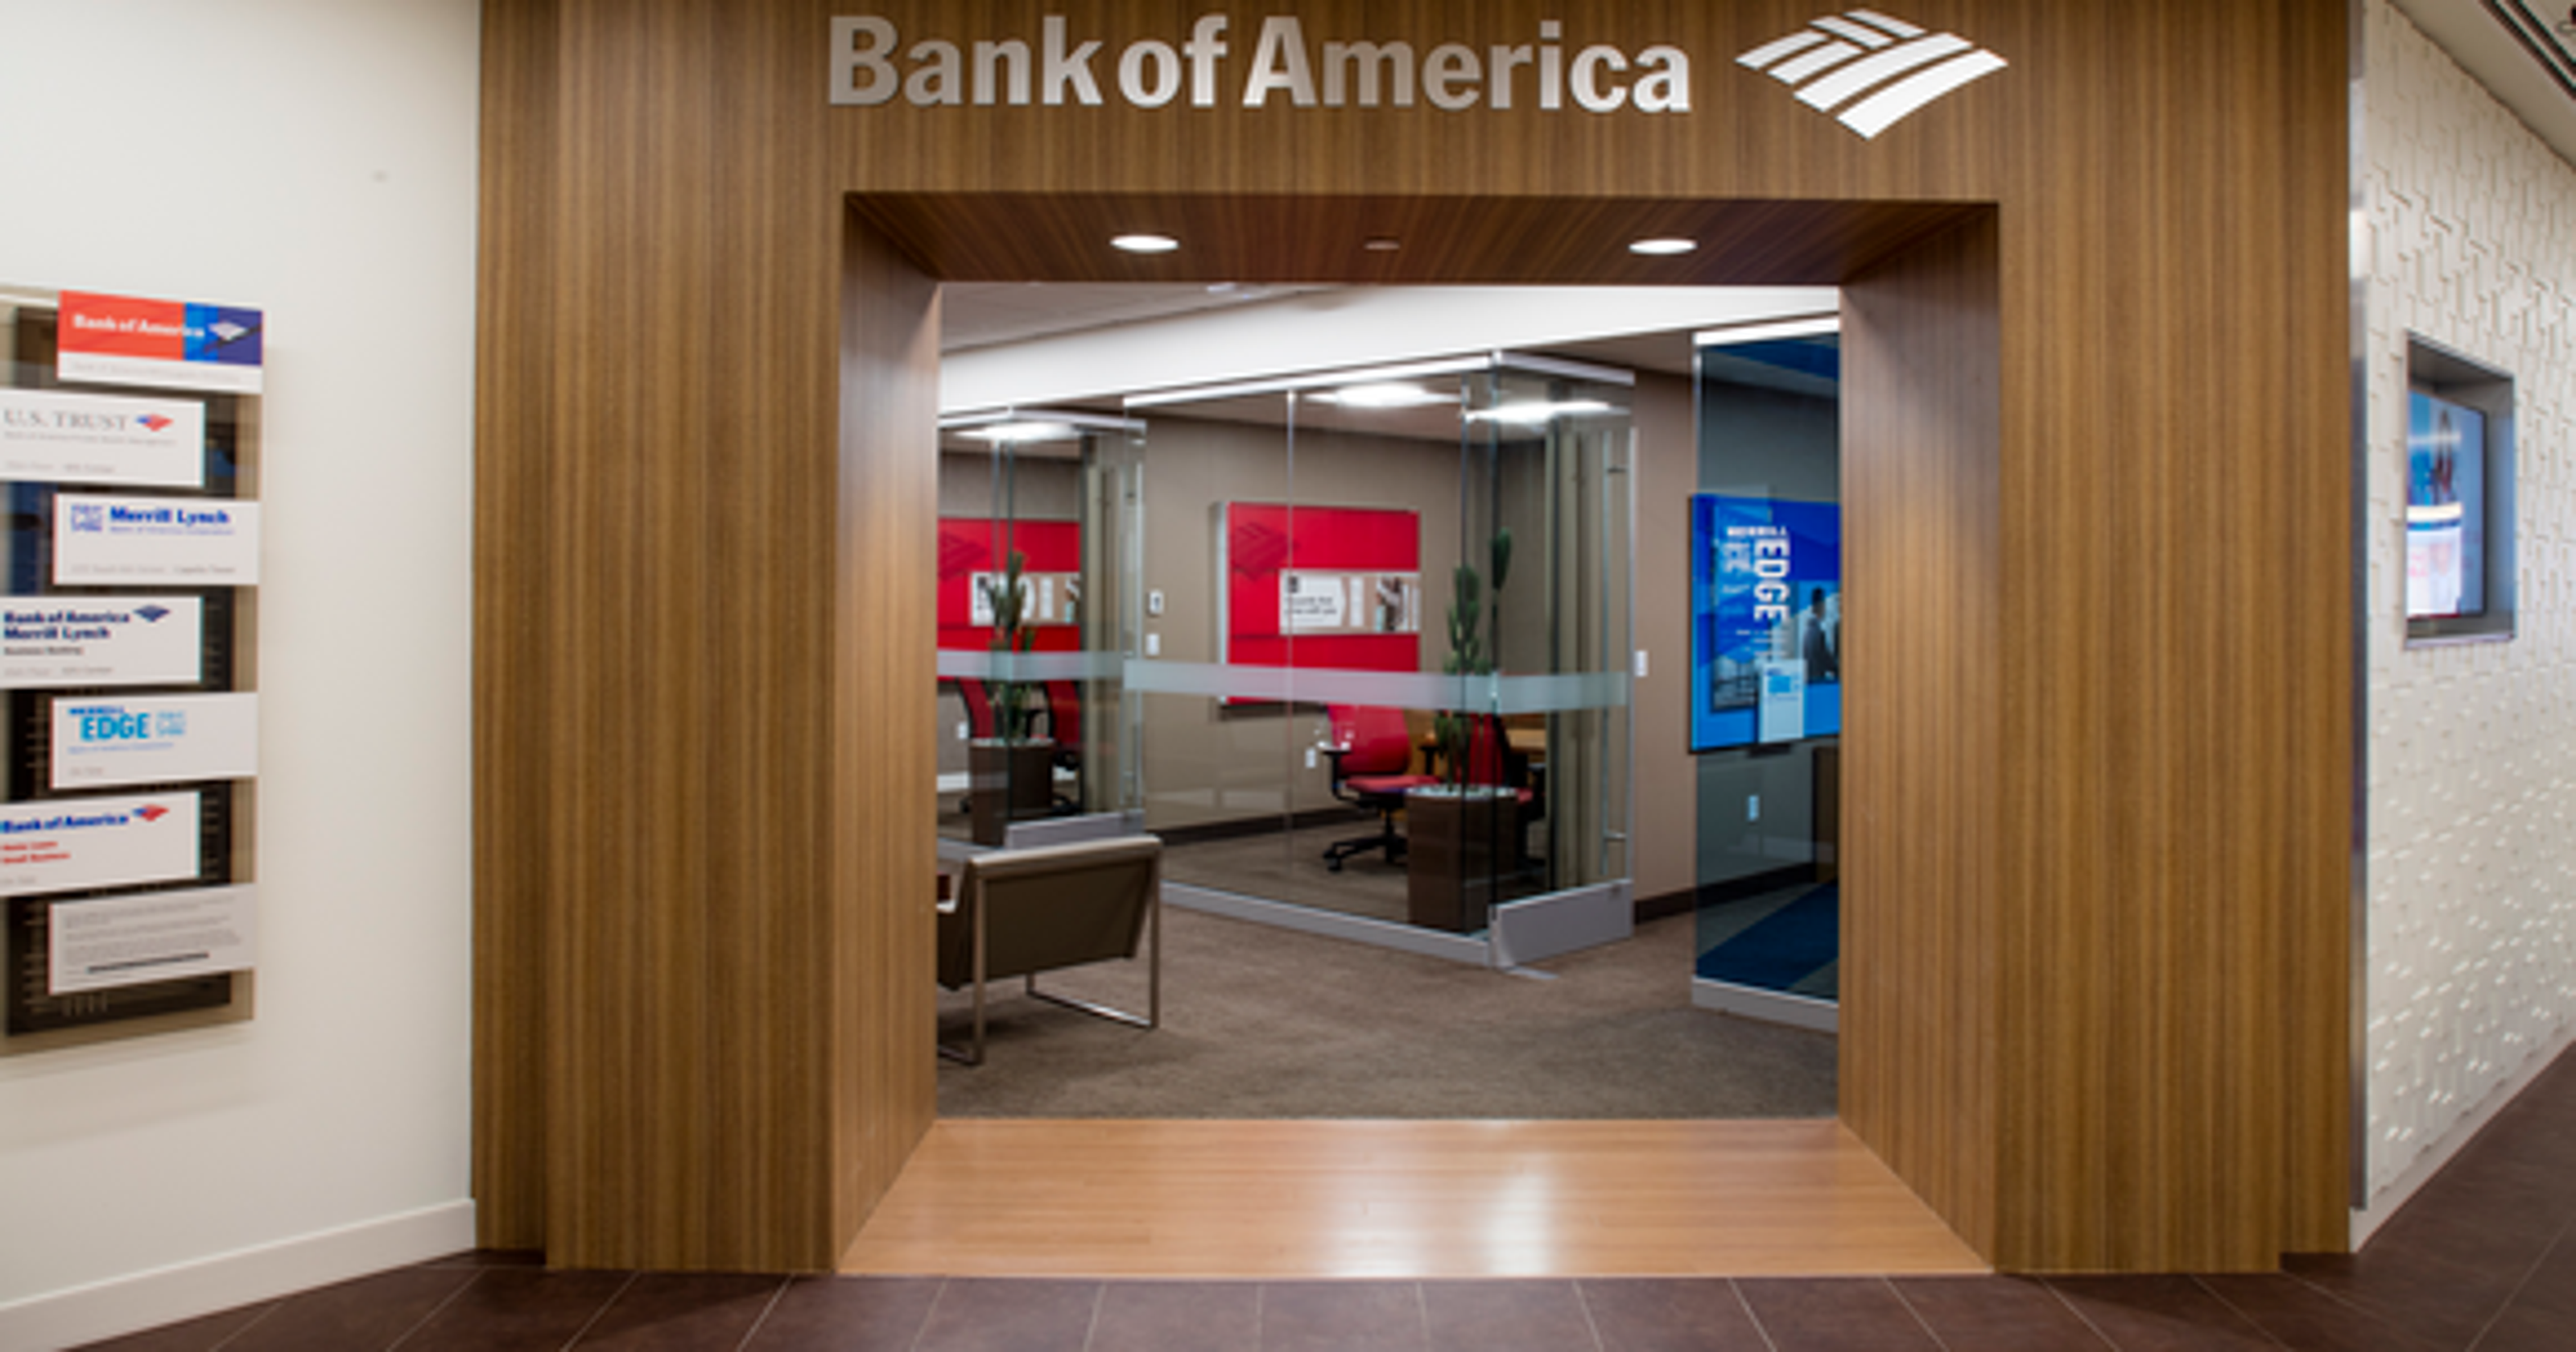 A senior Bank of America executives has left the company ...